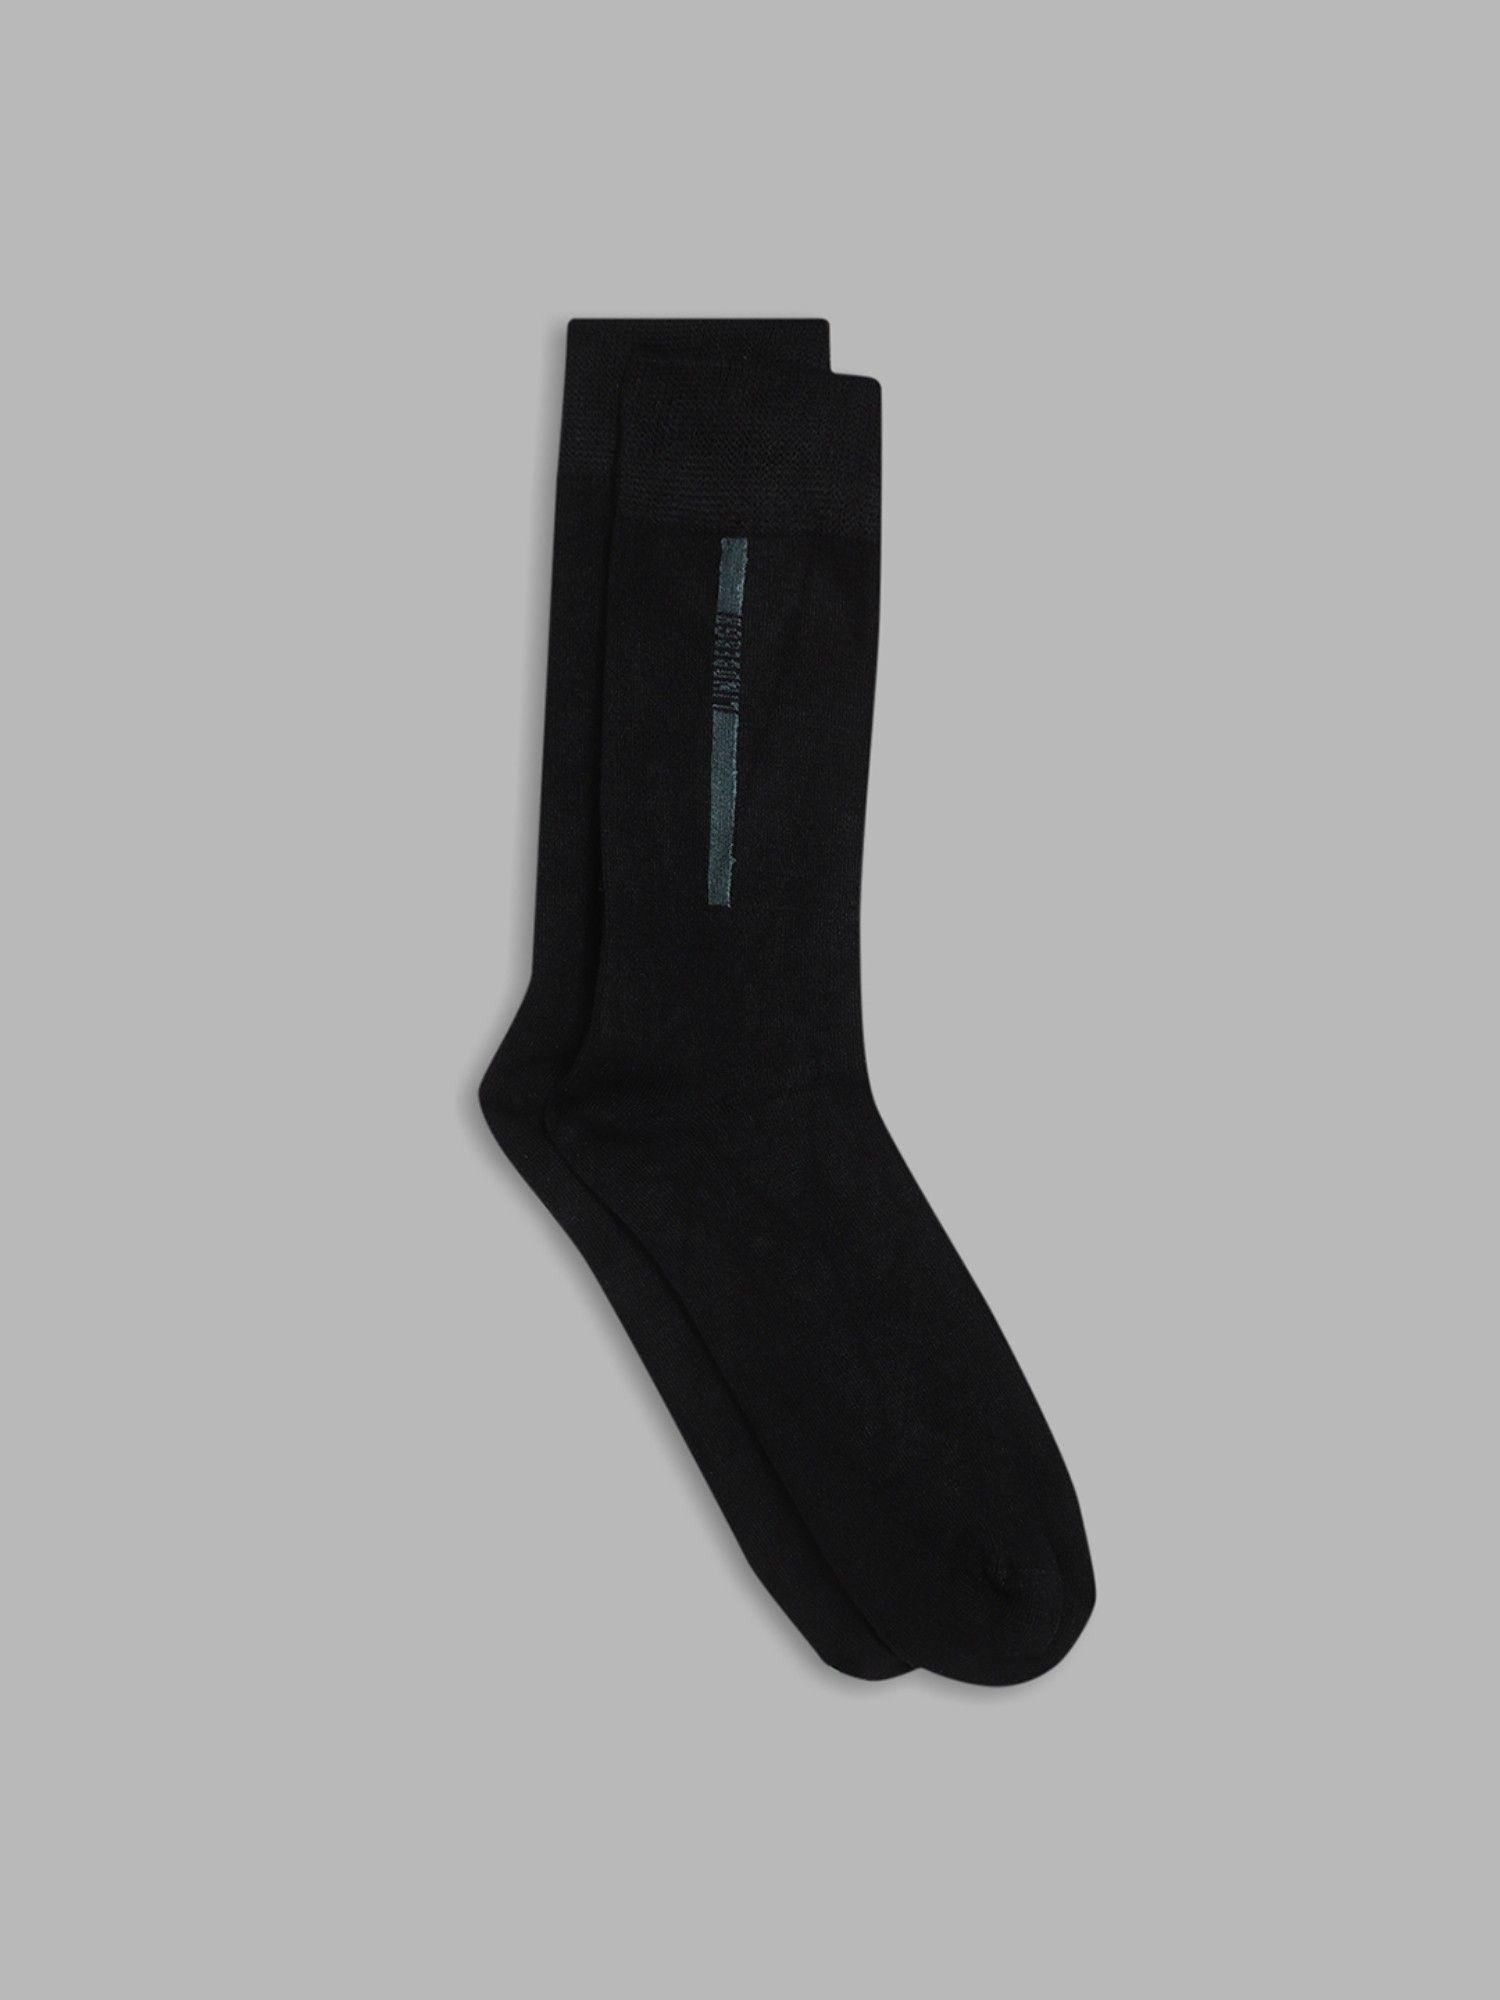 blue-&-black-solid-socks